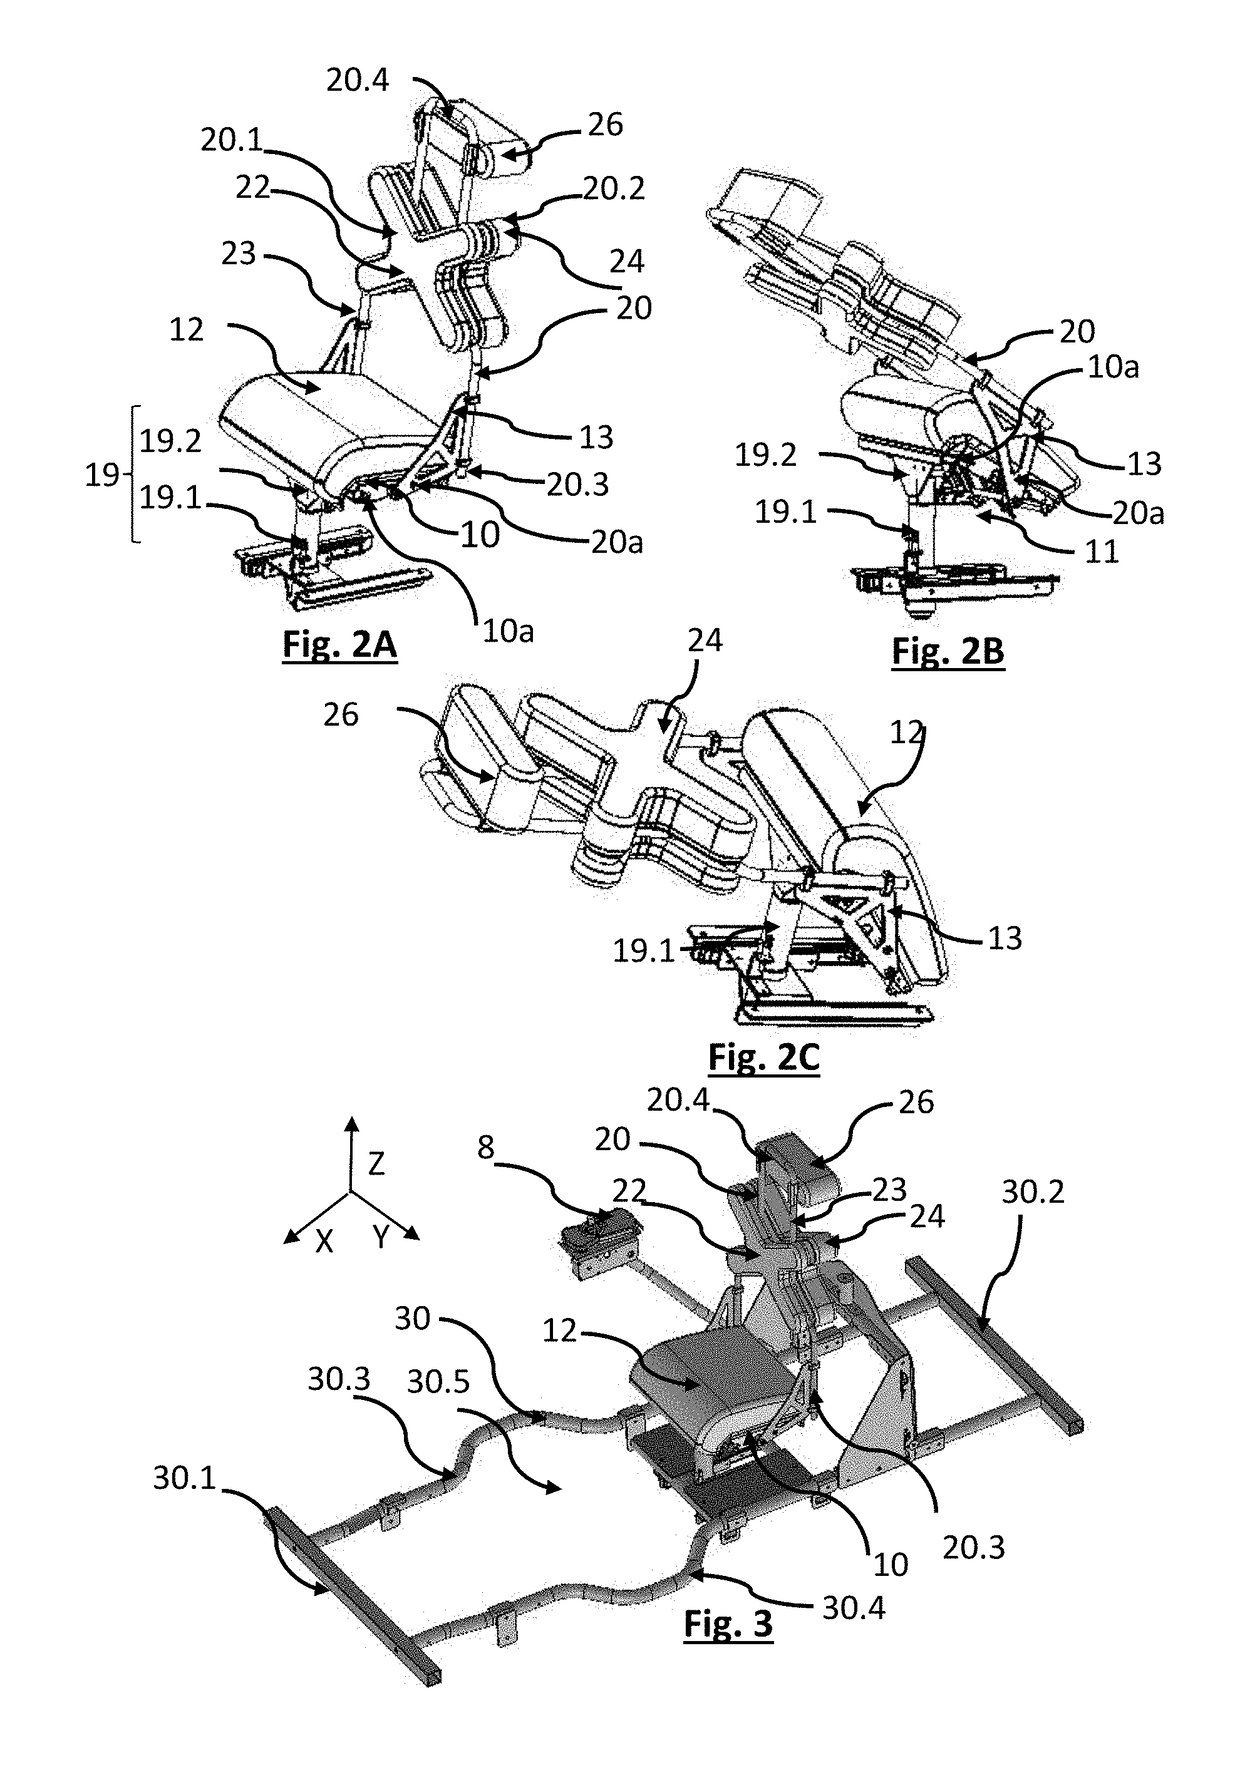 Ergonomic seat tilting between two configurations